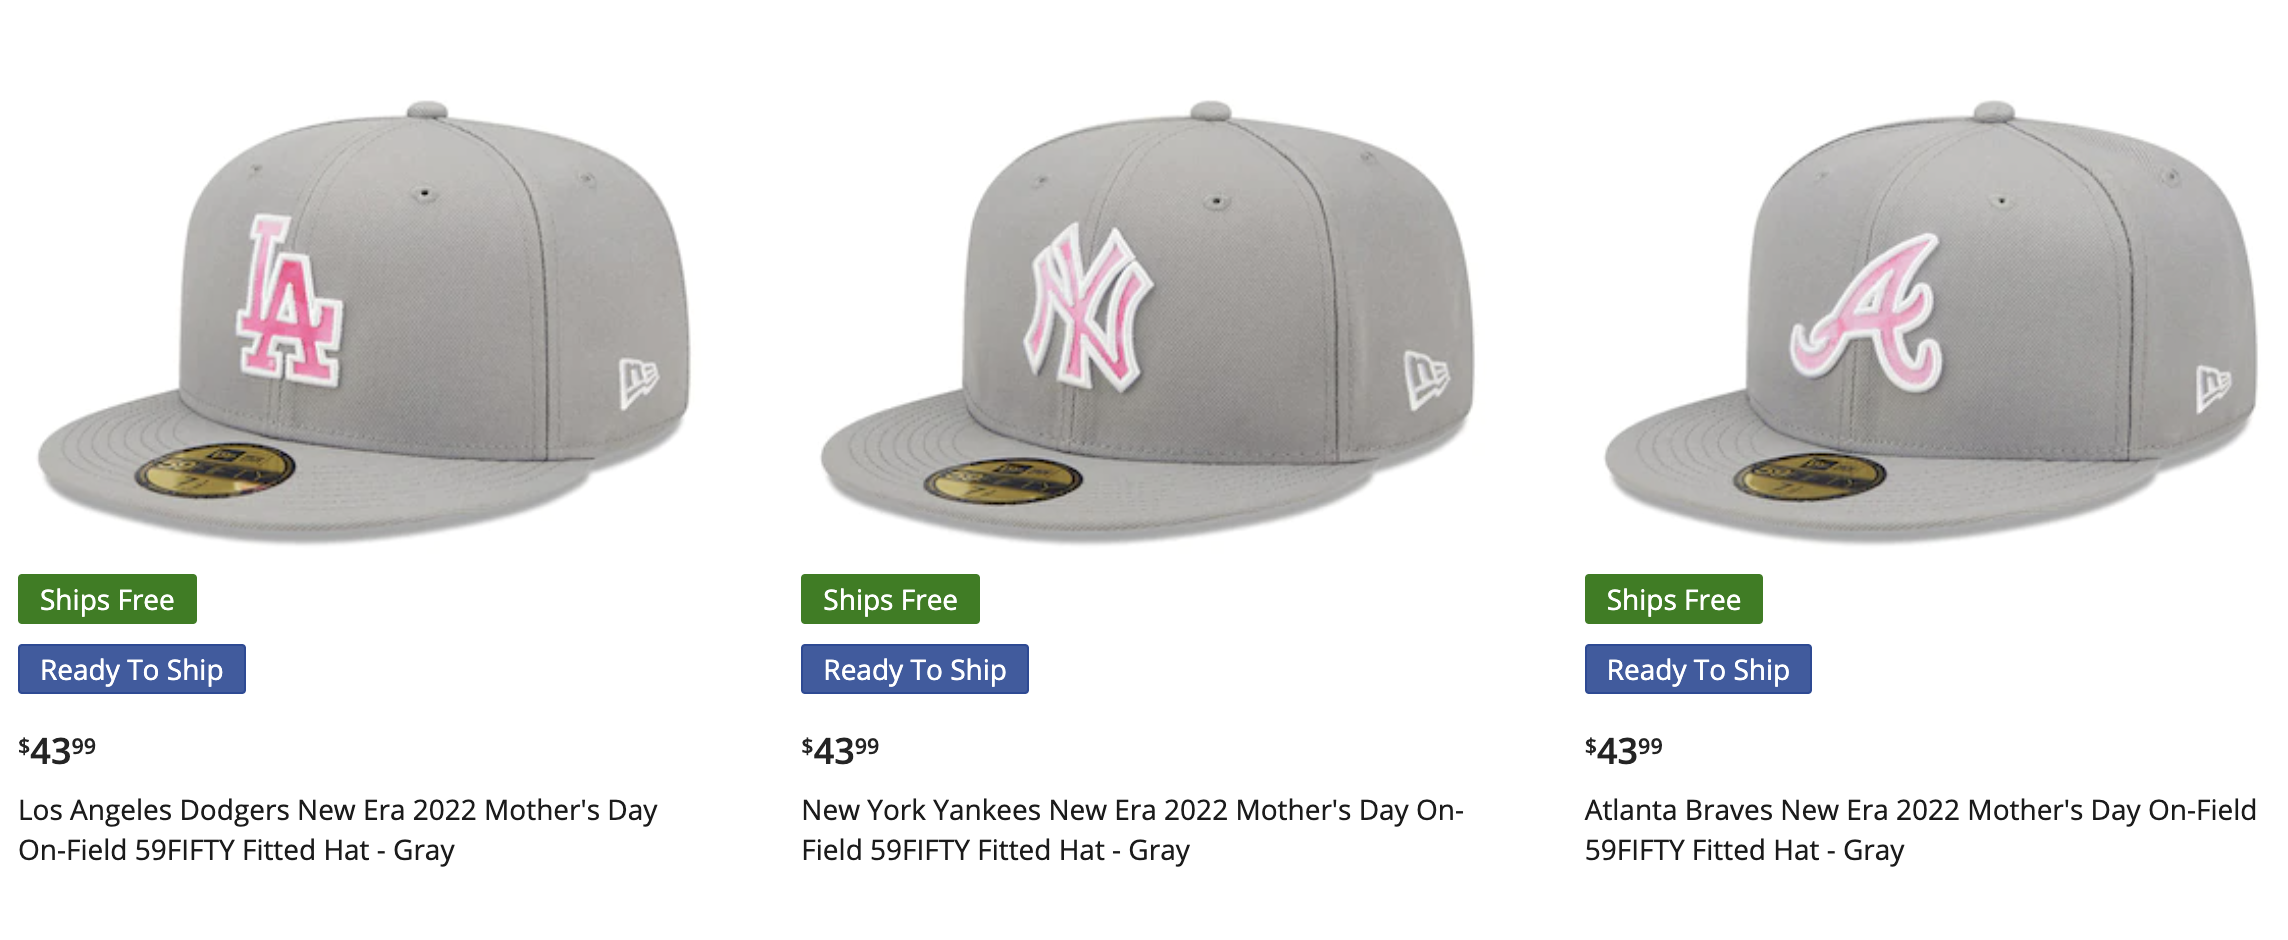 2023 MLB Mother's Day Caps Revealed – SportsLogos.Net News